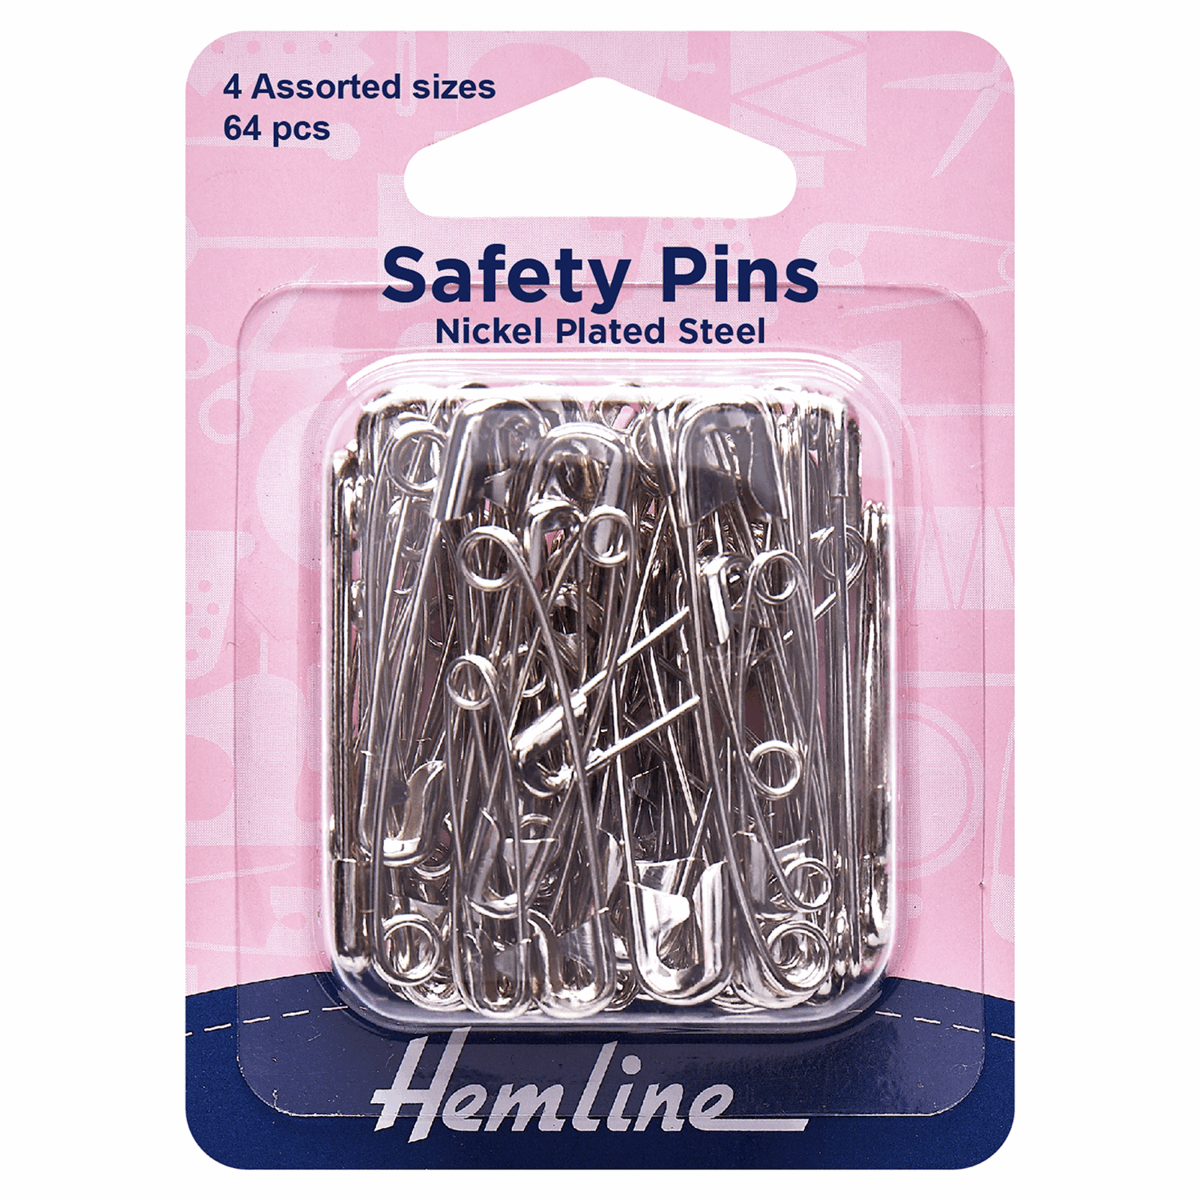 Hemline Saftey Pins Assorted Sizes (64pcs)